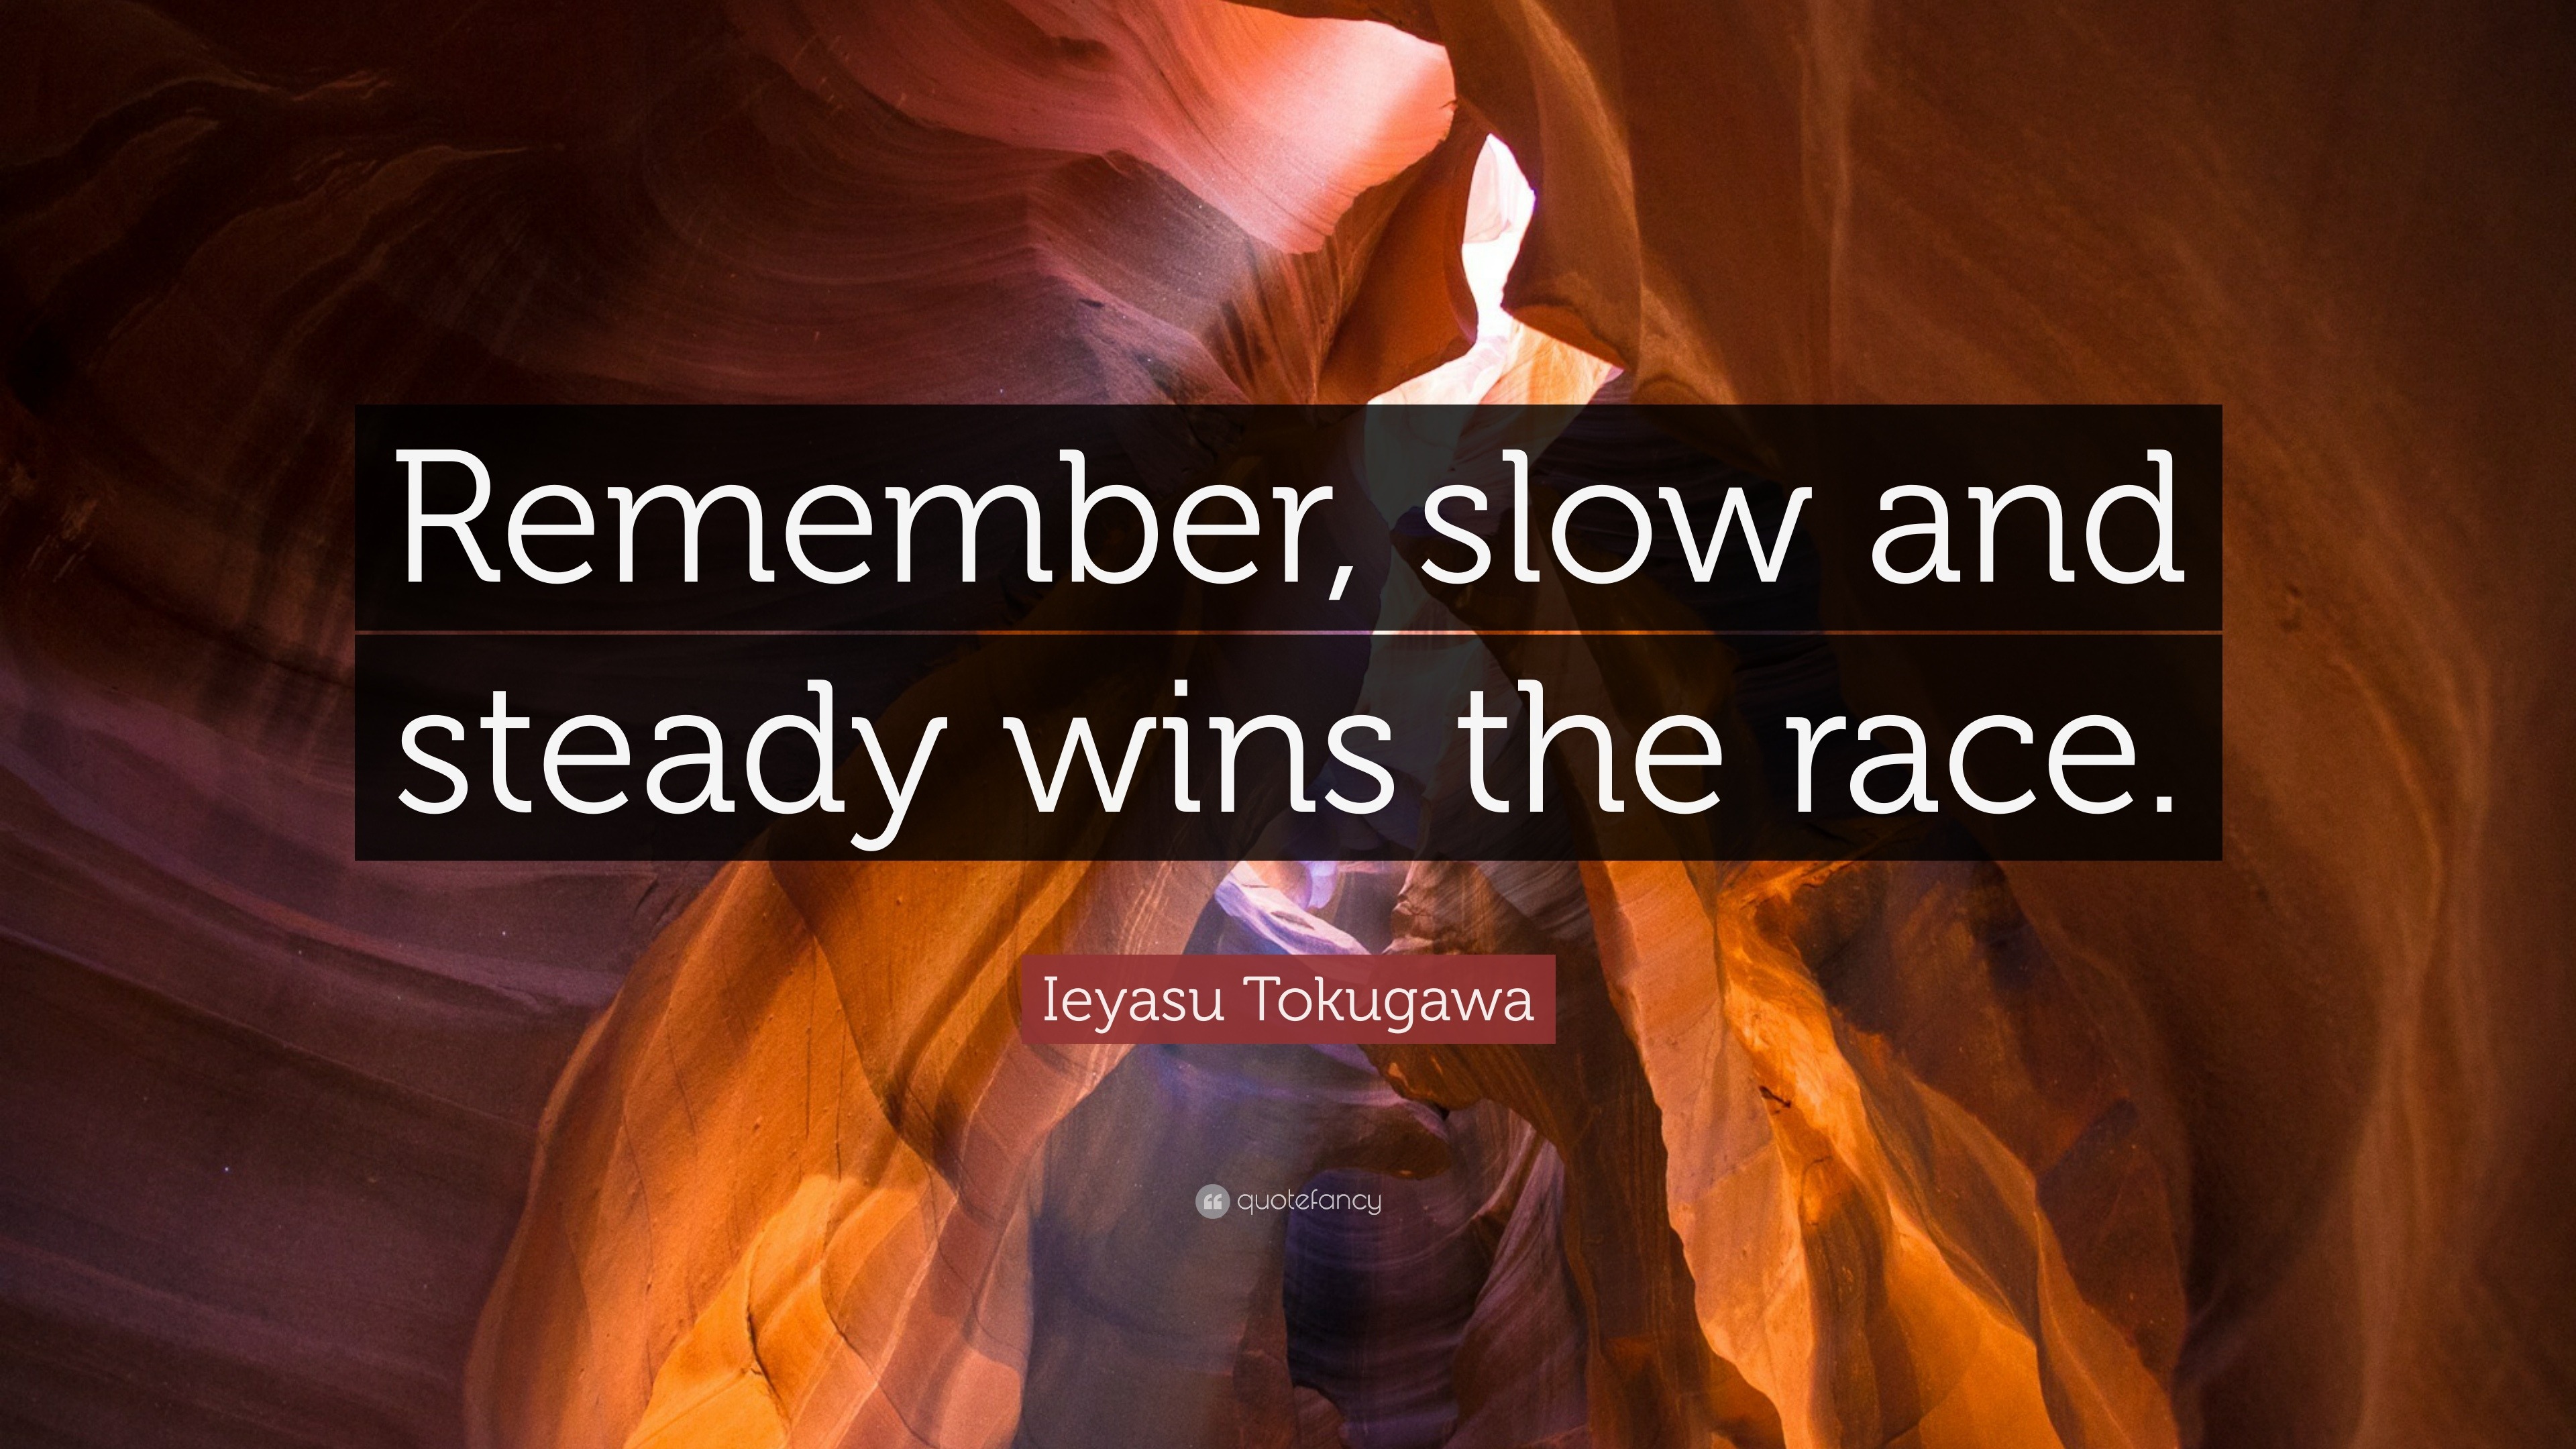 Ieyasu Tokugawa Quote: “Remember, slow and steady wins the race.”